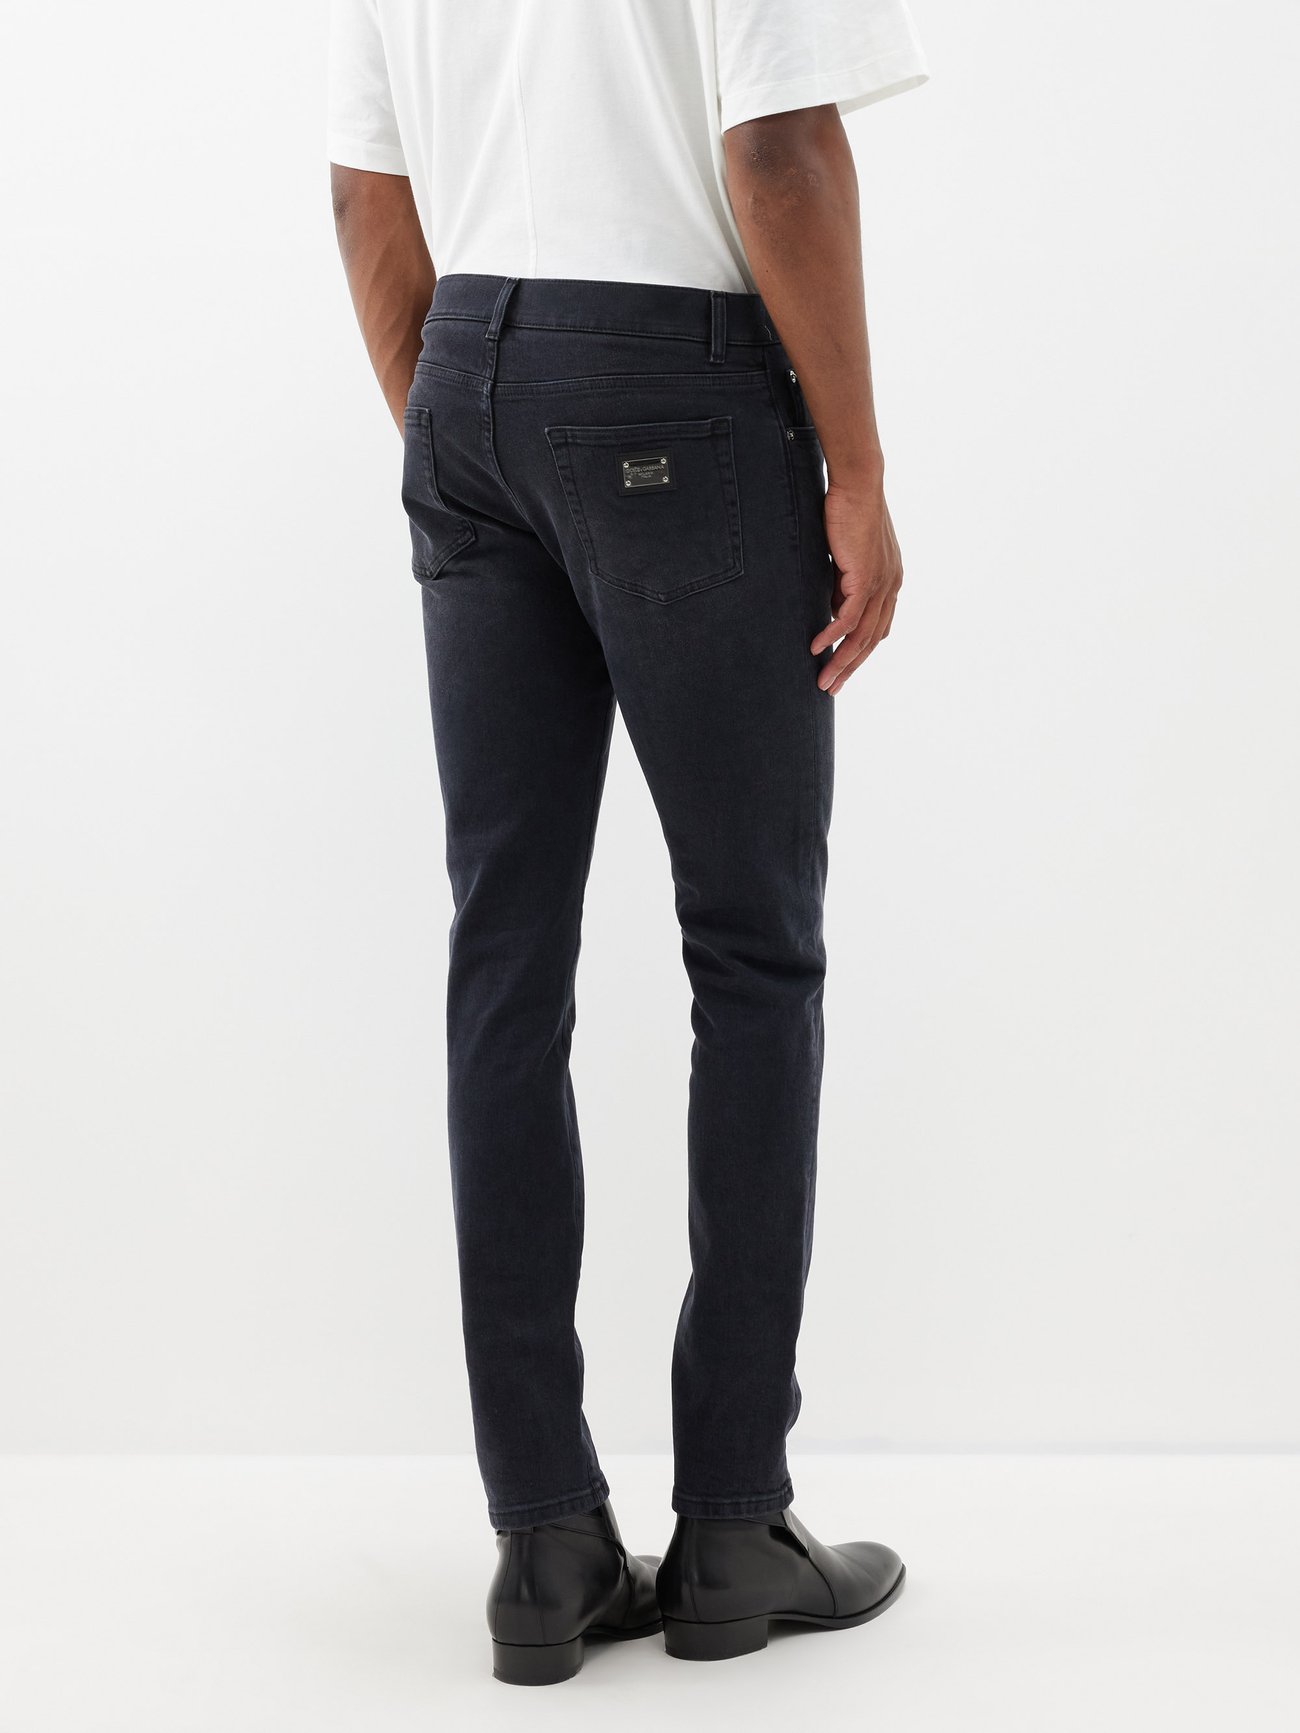 L'AGENCE, Jeans, Nwot Lagence Faux Pockets Black White Silver Glitter  Tuxedo Stripe Skinny Jeans